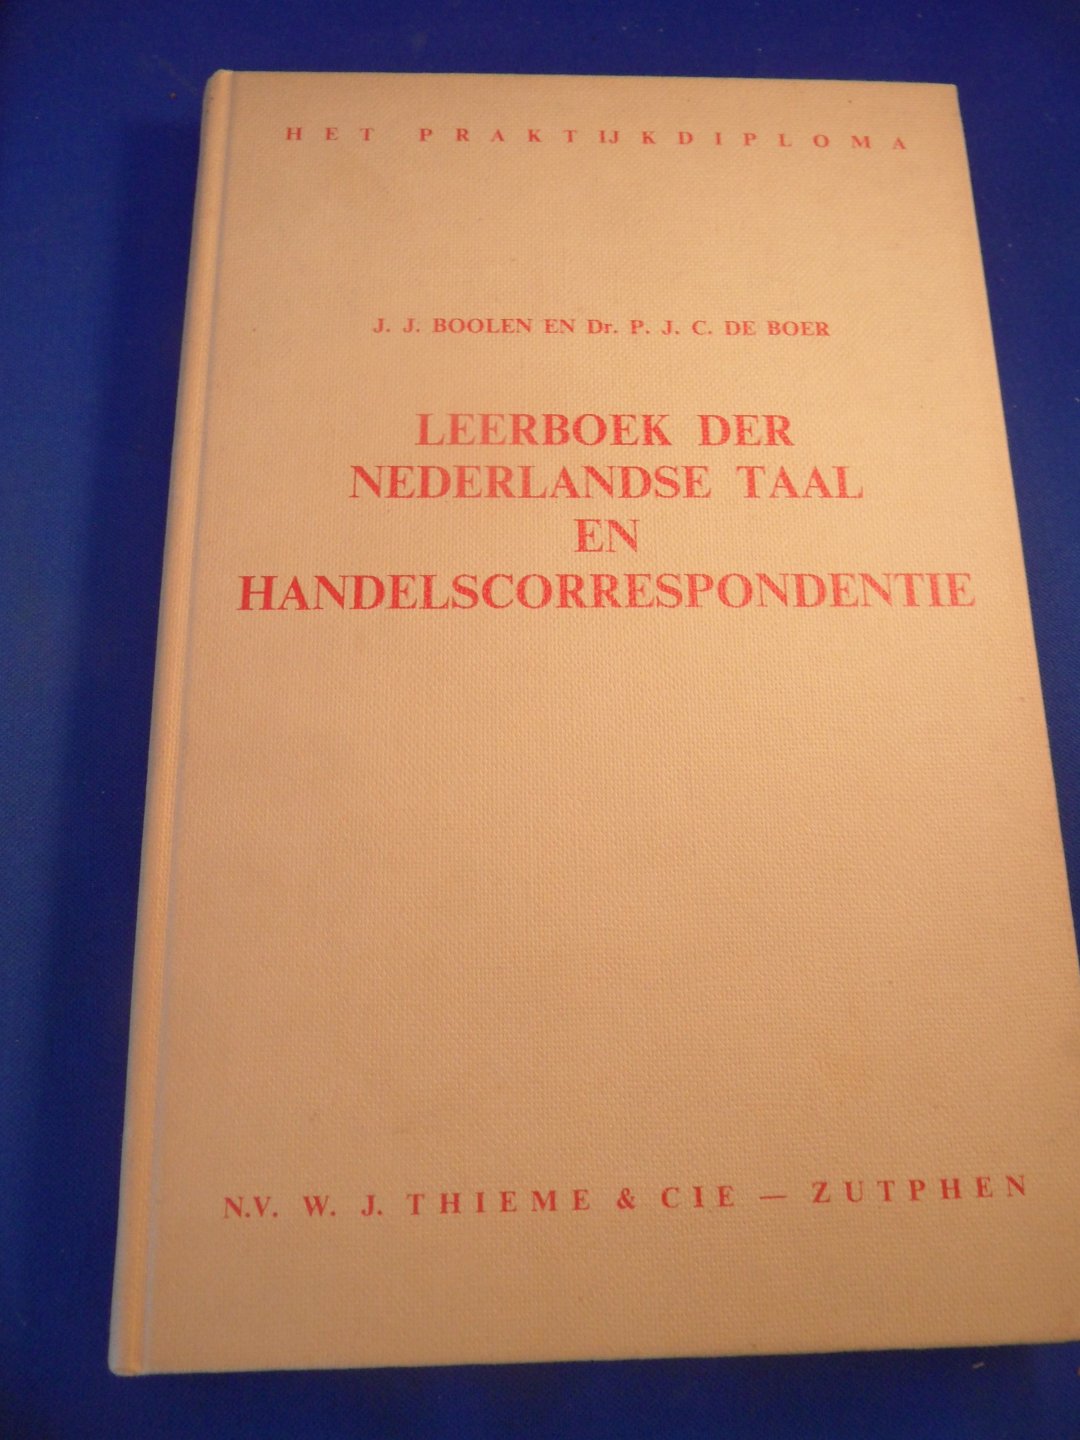 Boolen, J.J. en Boer, dr. P.J.C. - Leerboek der Nederlandse taal en handelscorrespondentie